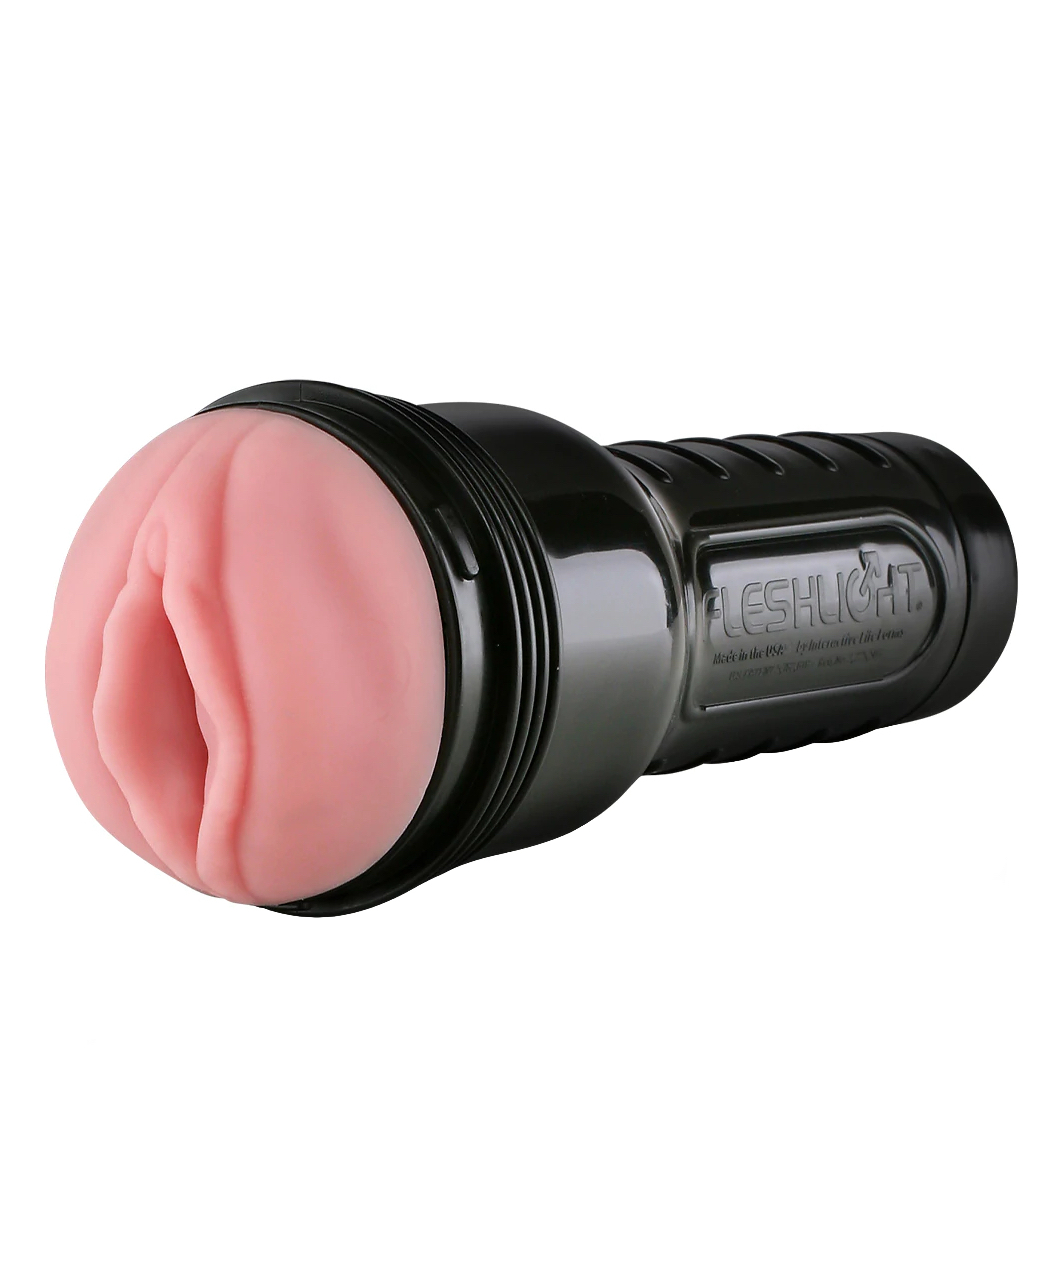 Fleshlight Vibro Pink Lady Touch masturbators